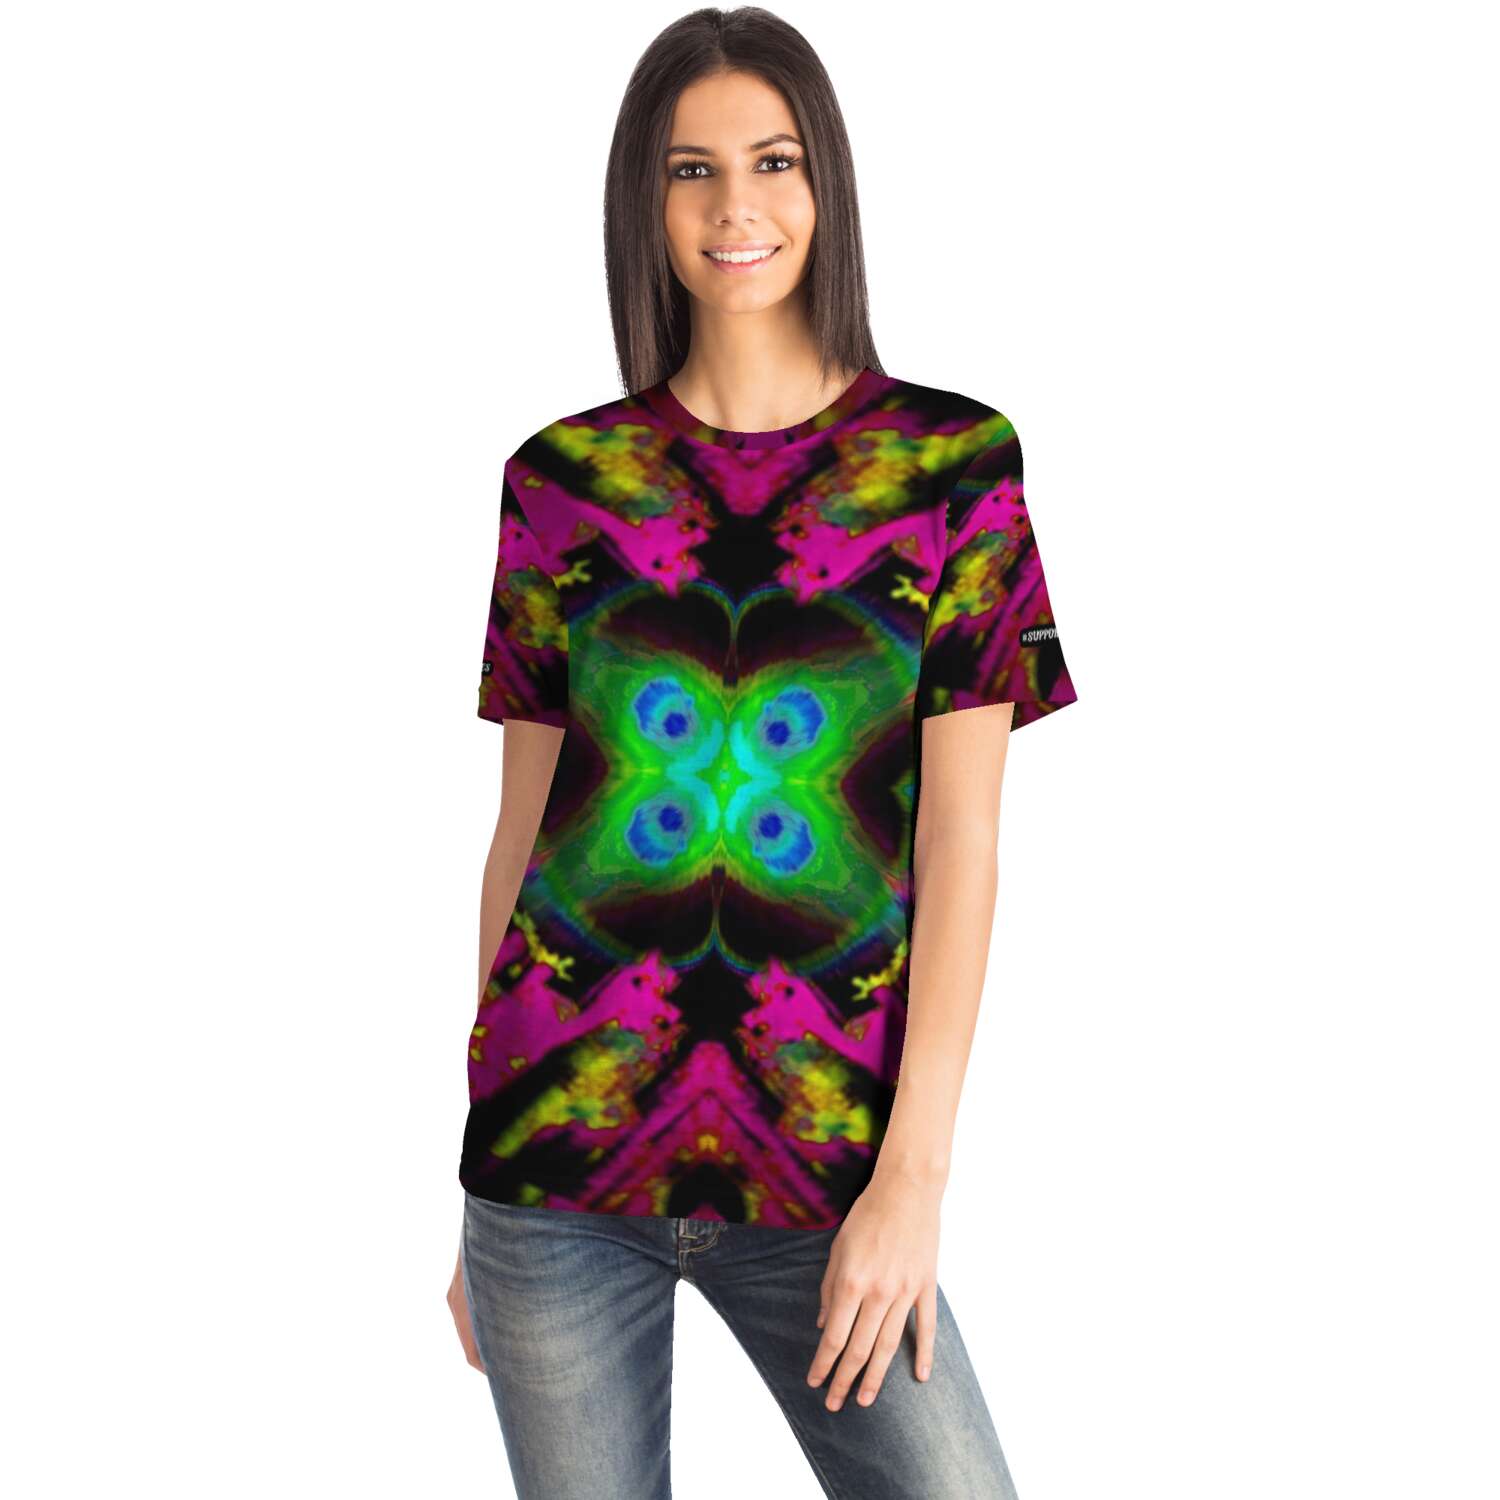 CryptoBoxers - NFT T-shirt - Vacano